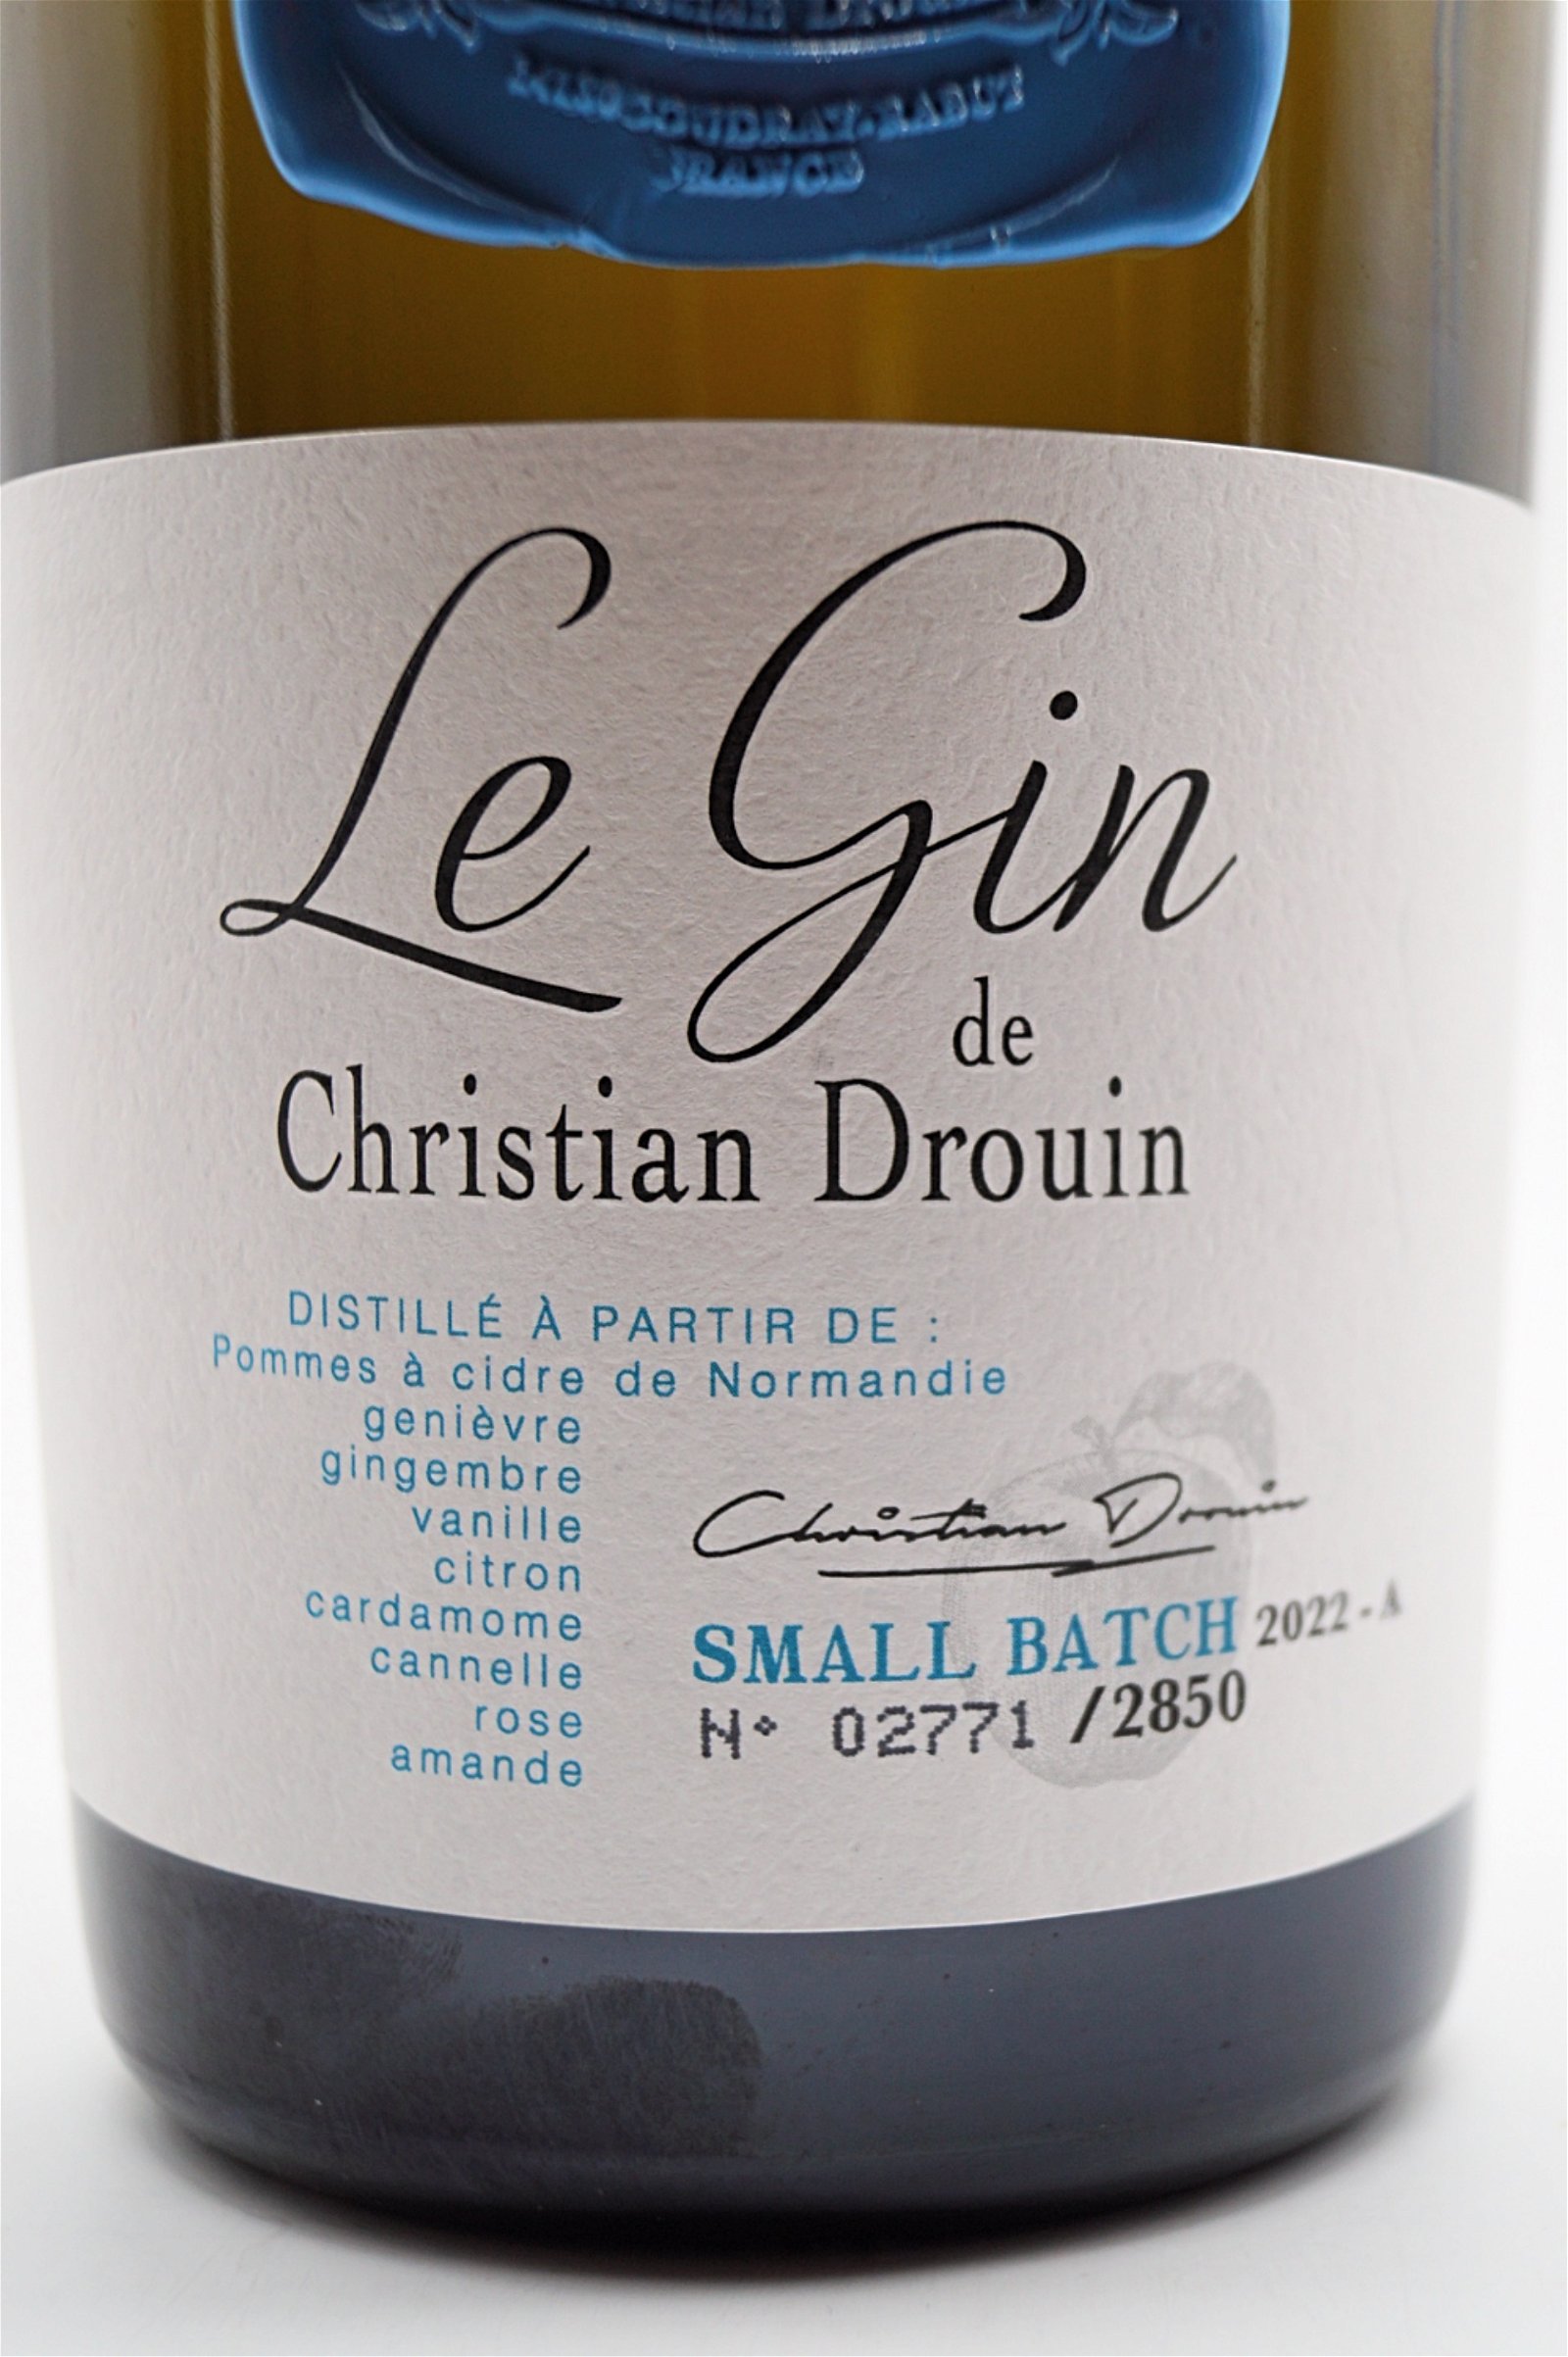 Le Gin der Christian Drouin Gin